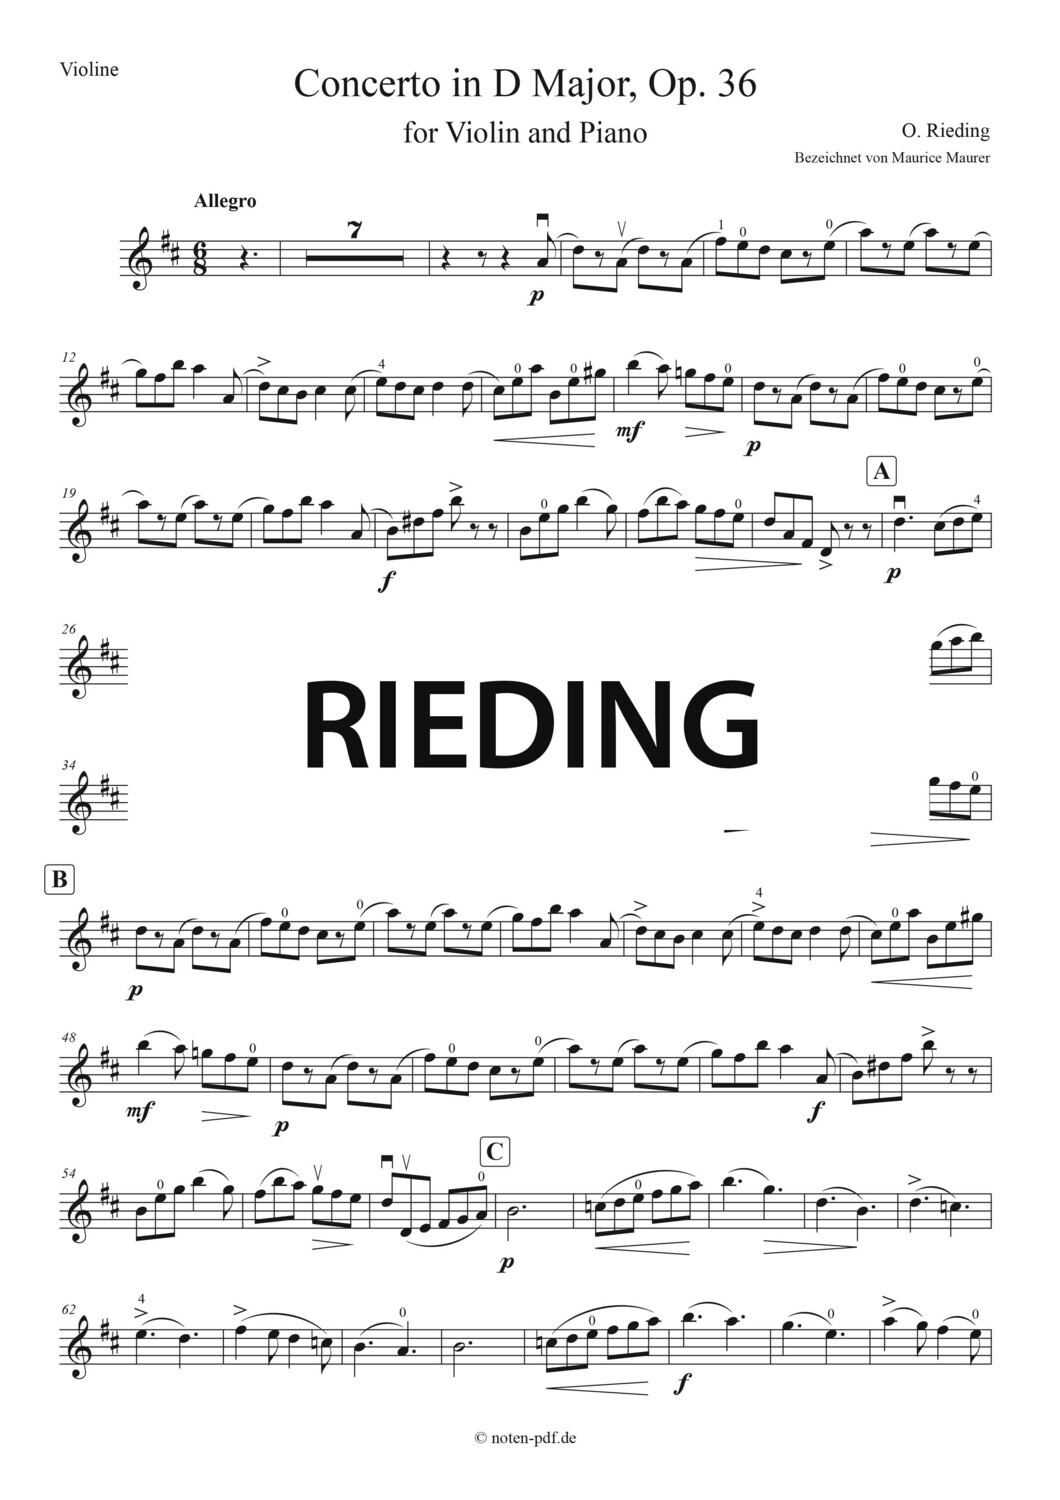 Rieding: Concerto in D Major Op. 36, 3. Movement